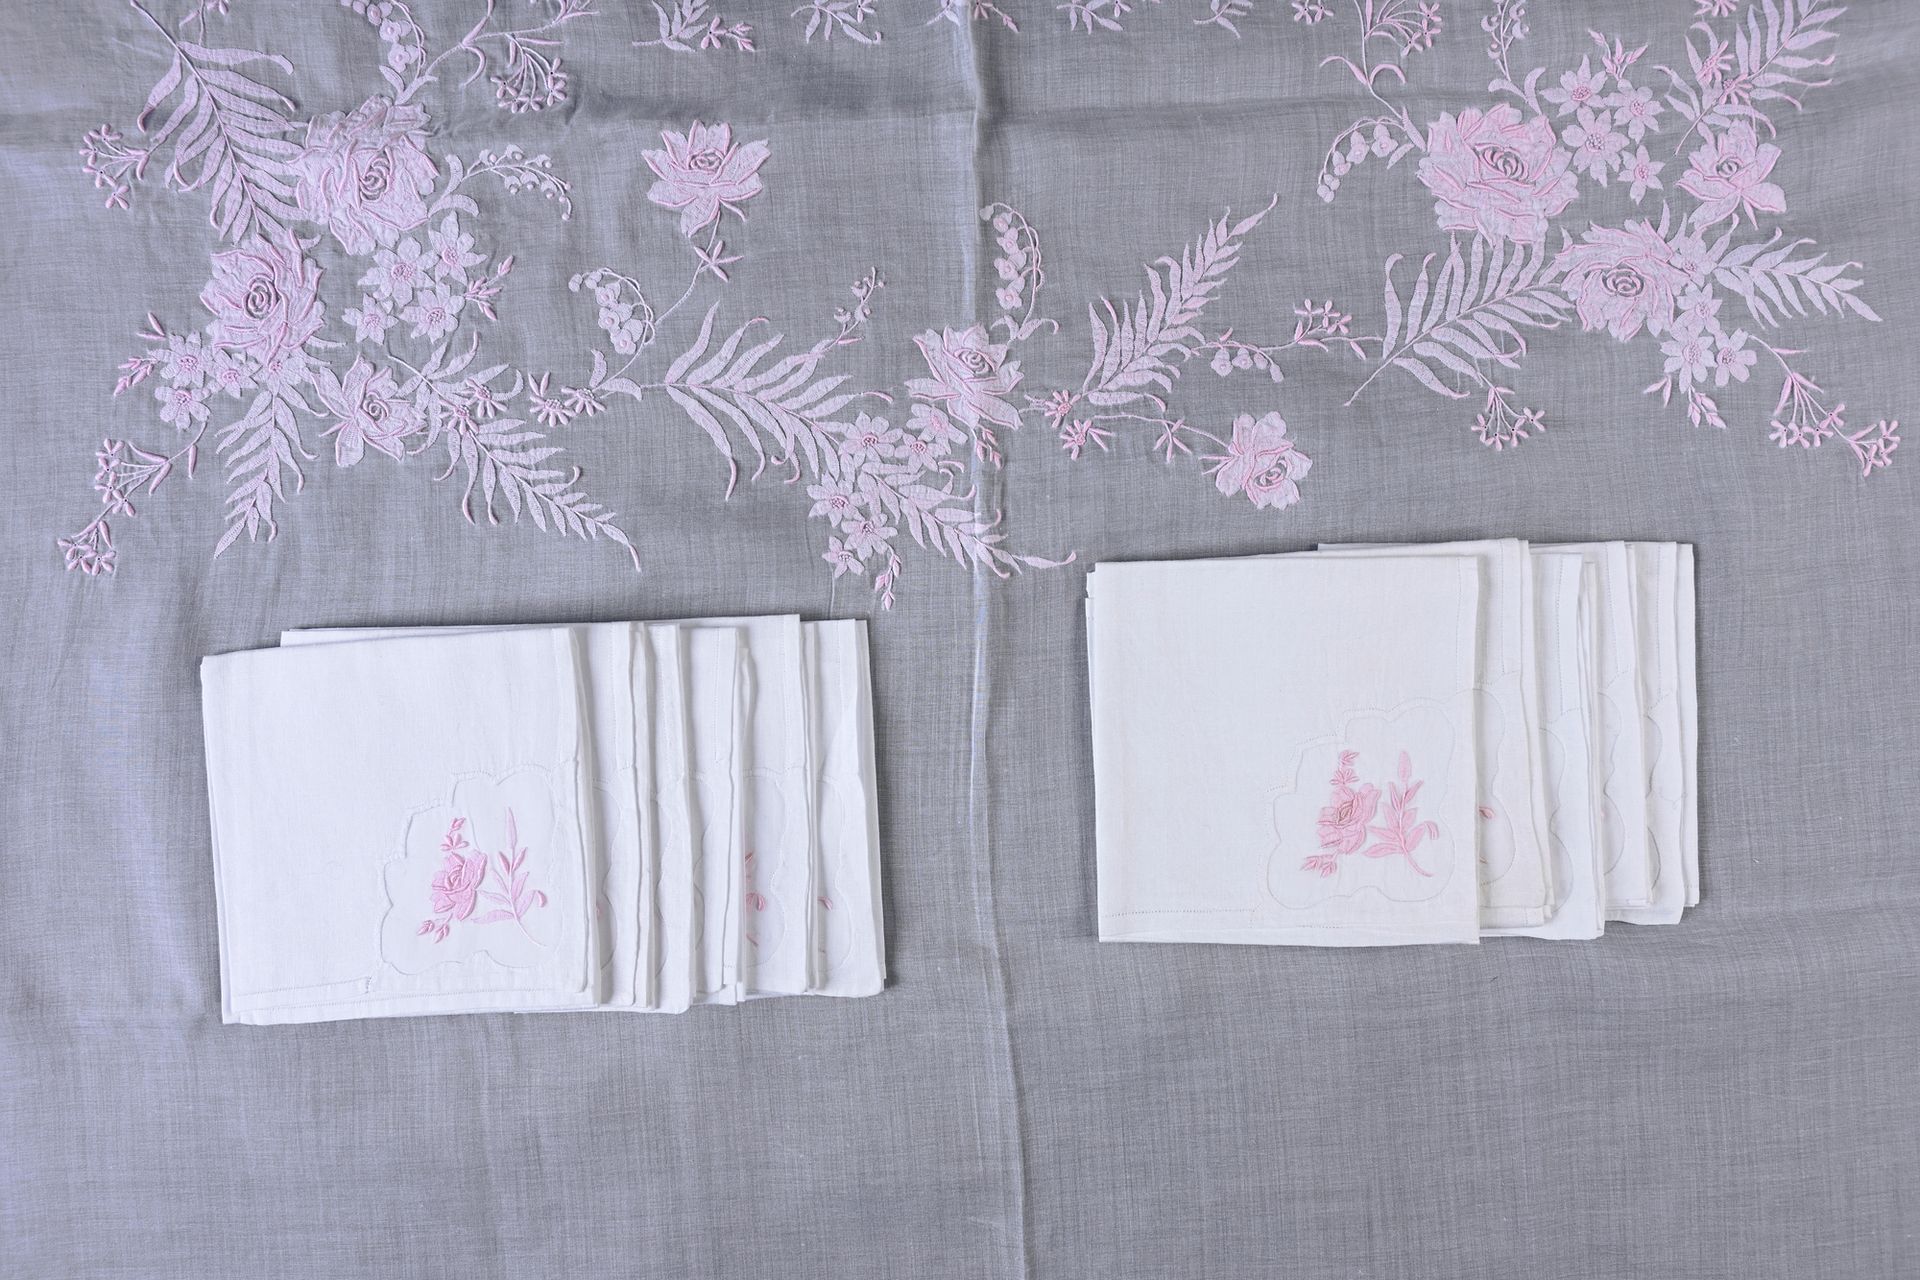 Null 20世纪上半叶，粉色刺绣欧根迪桌布和餐巾。
桌布和11张欧根迪餐巾，上面绣有优雅的玫瑰花、叶子和花蕾的图案。
桌布尺寸：2,60 x 1,70 m (&hellip;